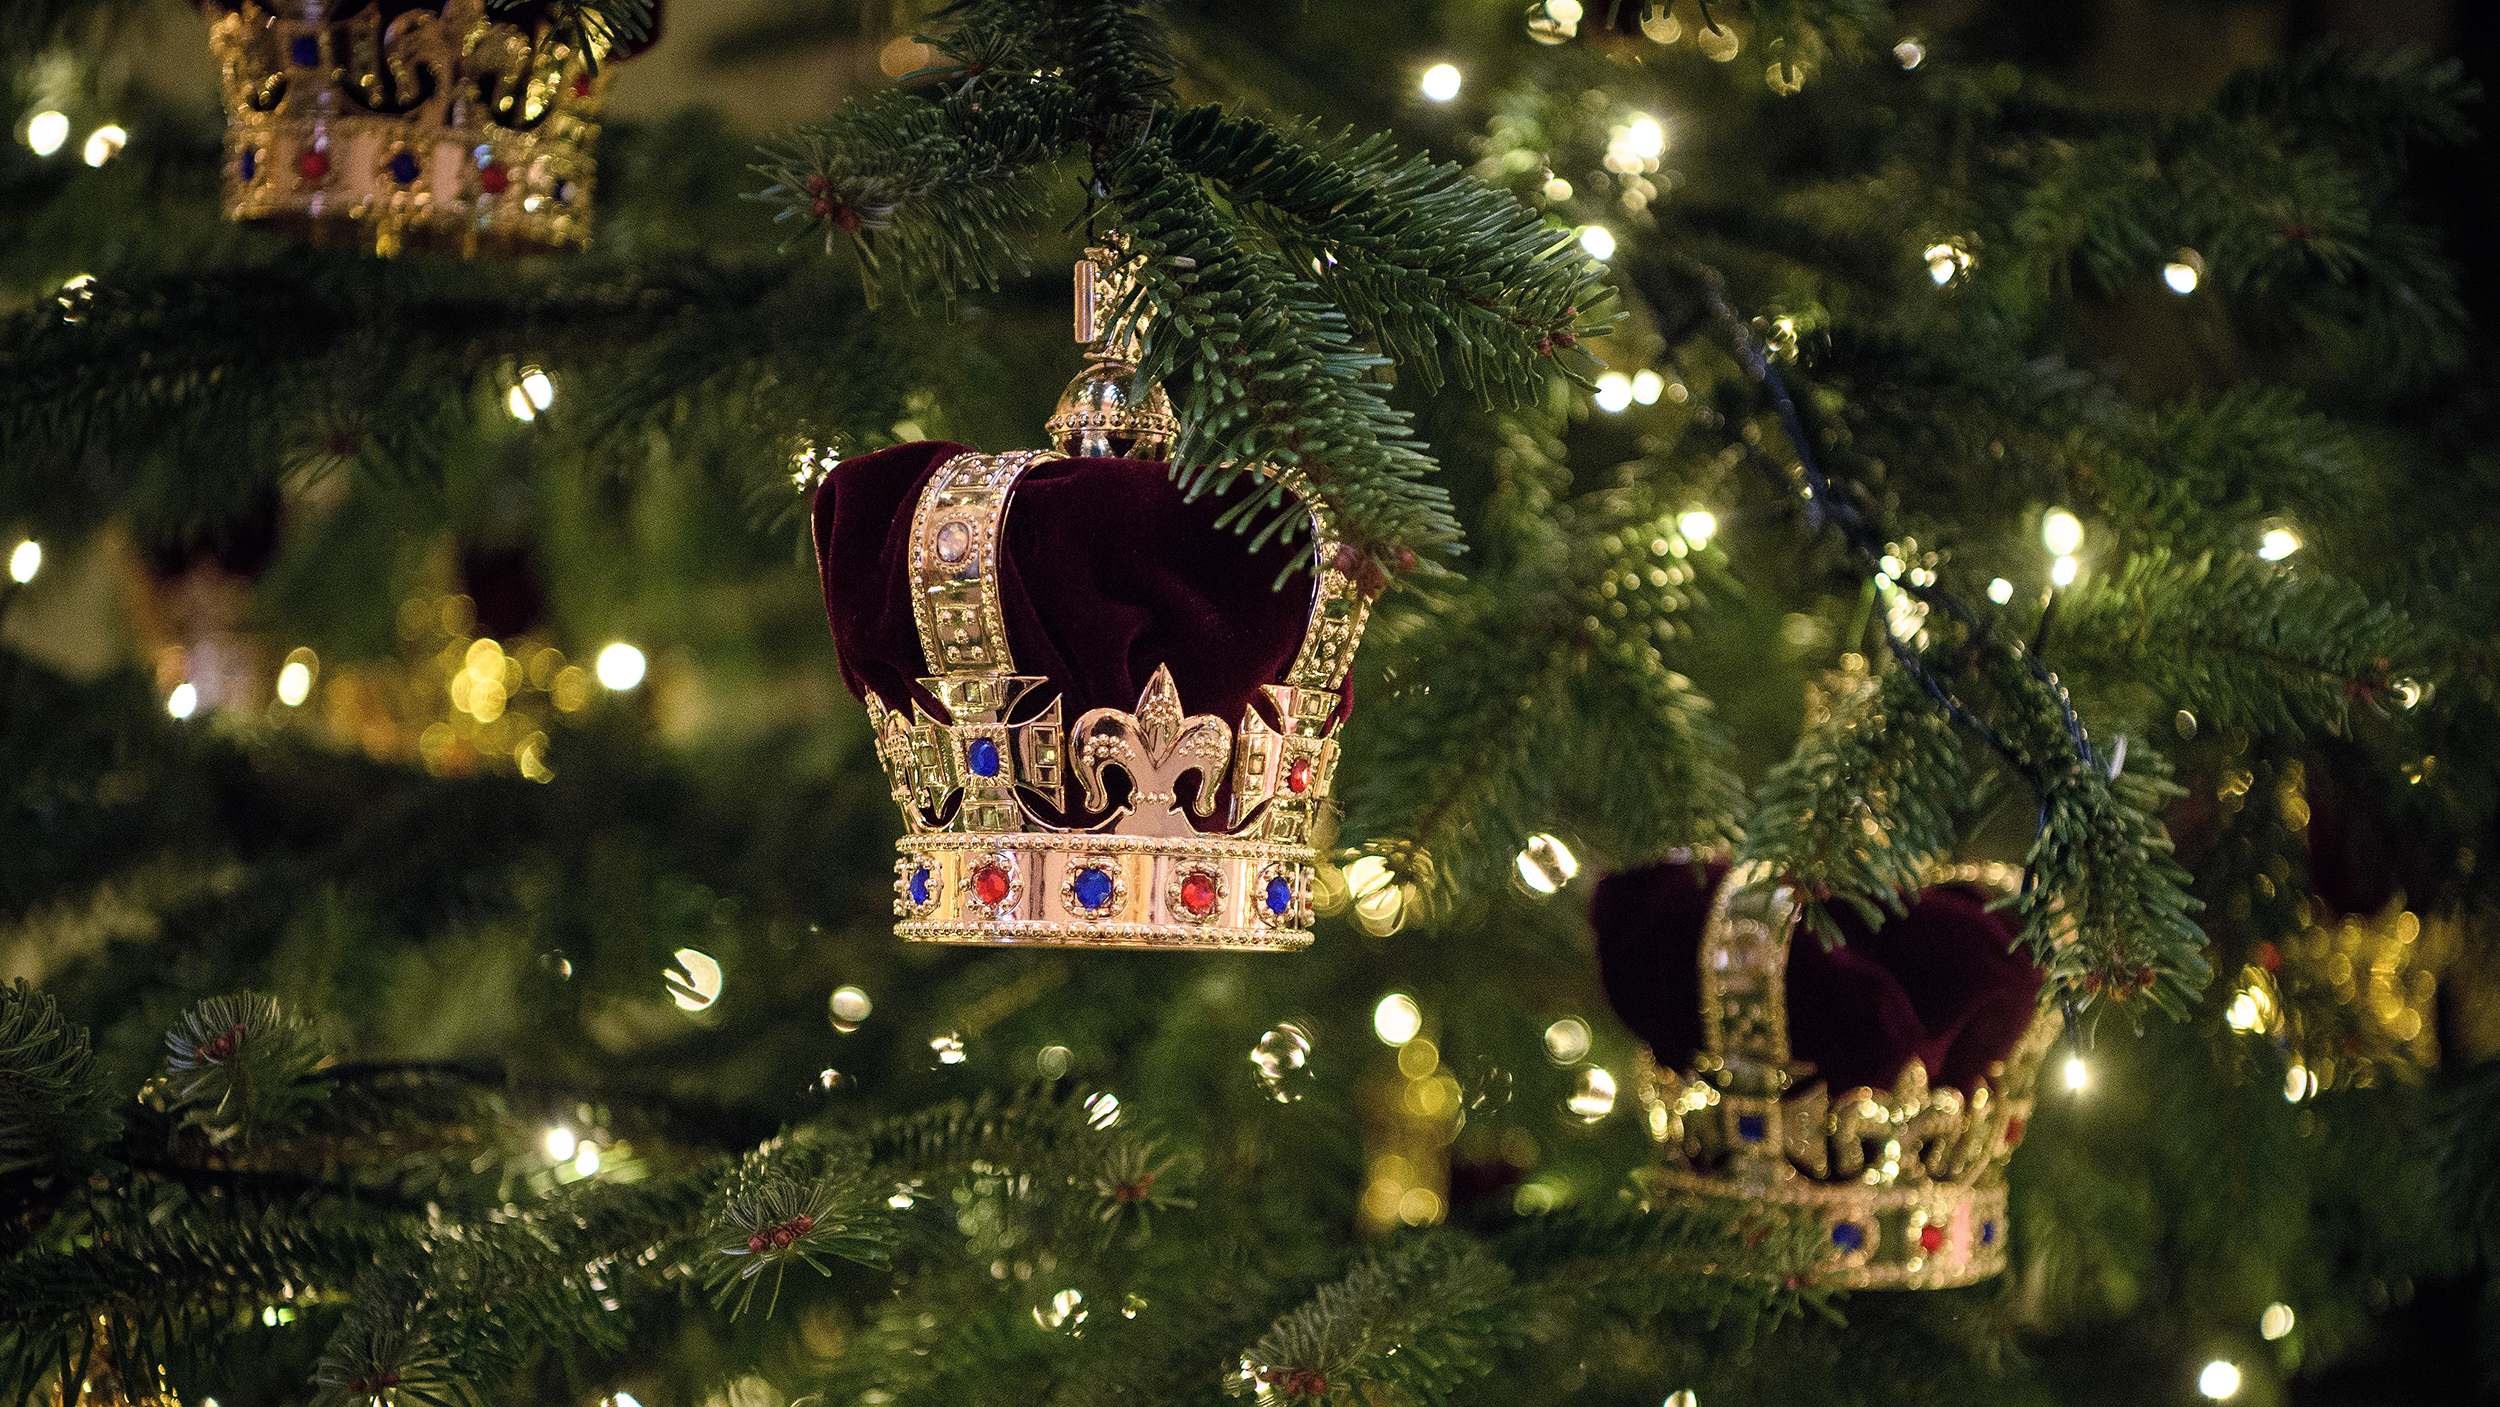 Buckingham Palace debuts its Christmas decorations